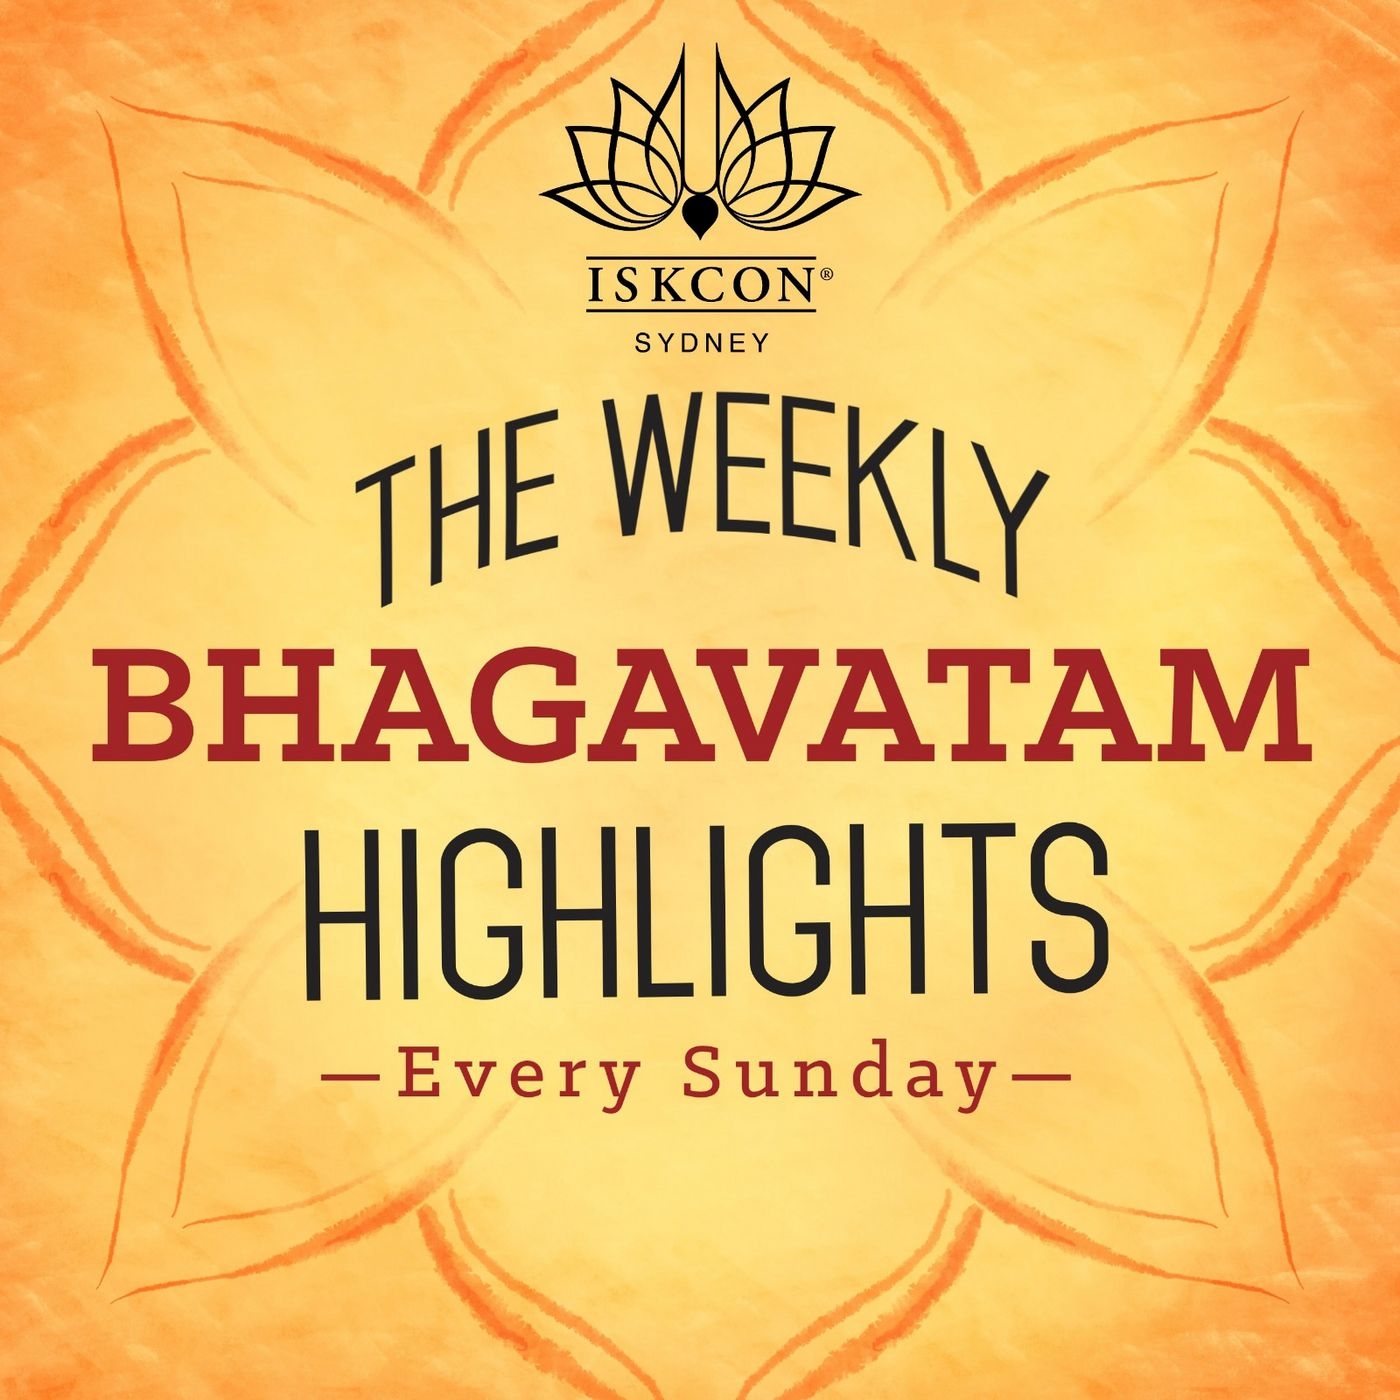 The Weekly Bhagavatam Highlights